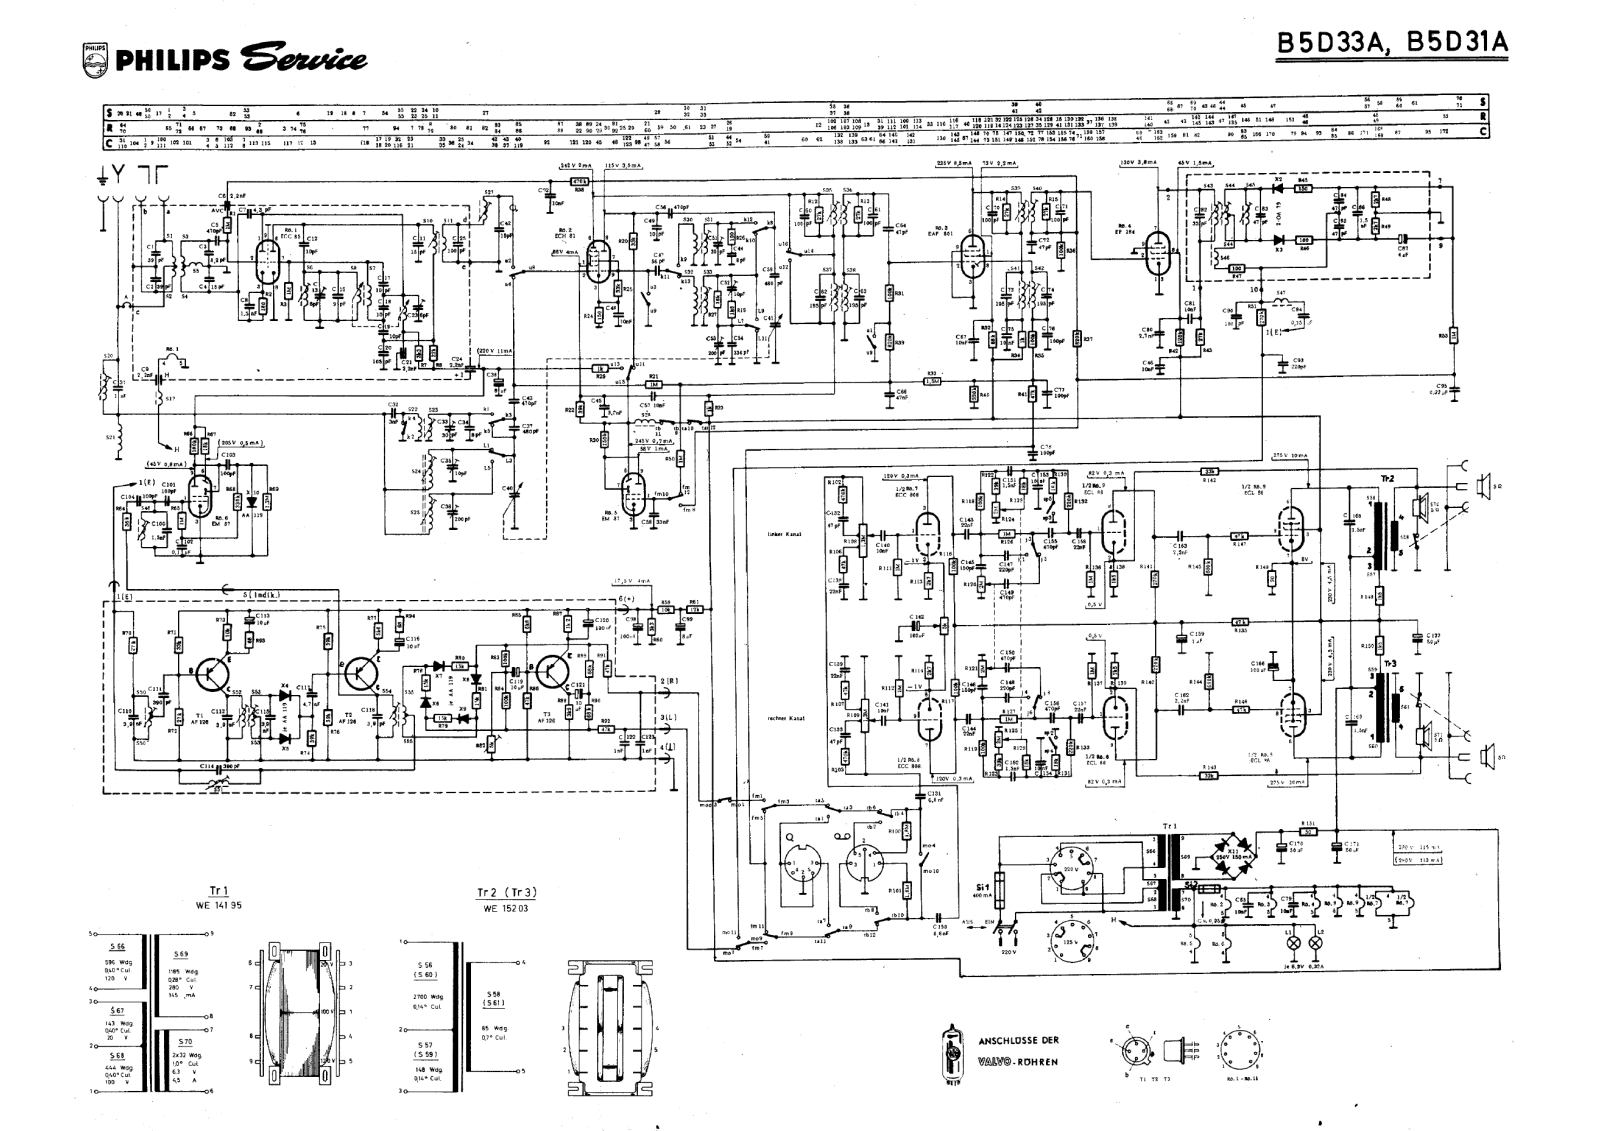 Philips b5d33a, b5d31a schematic